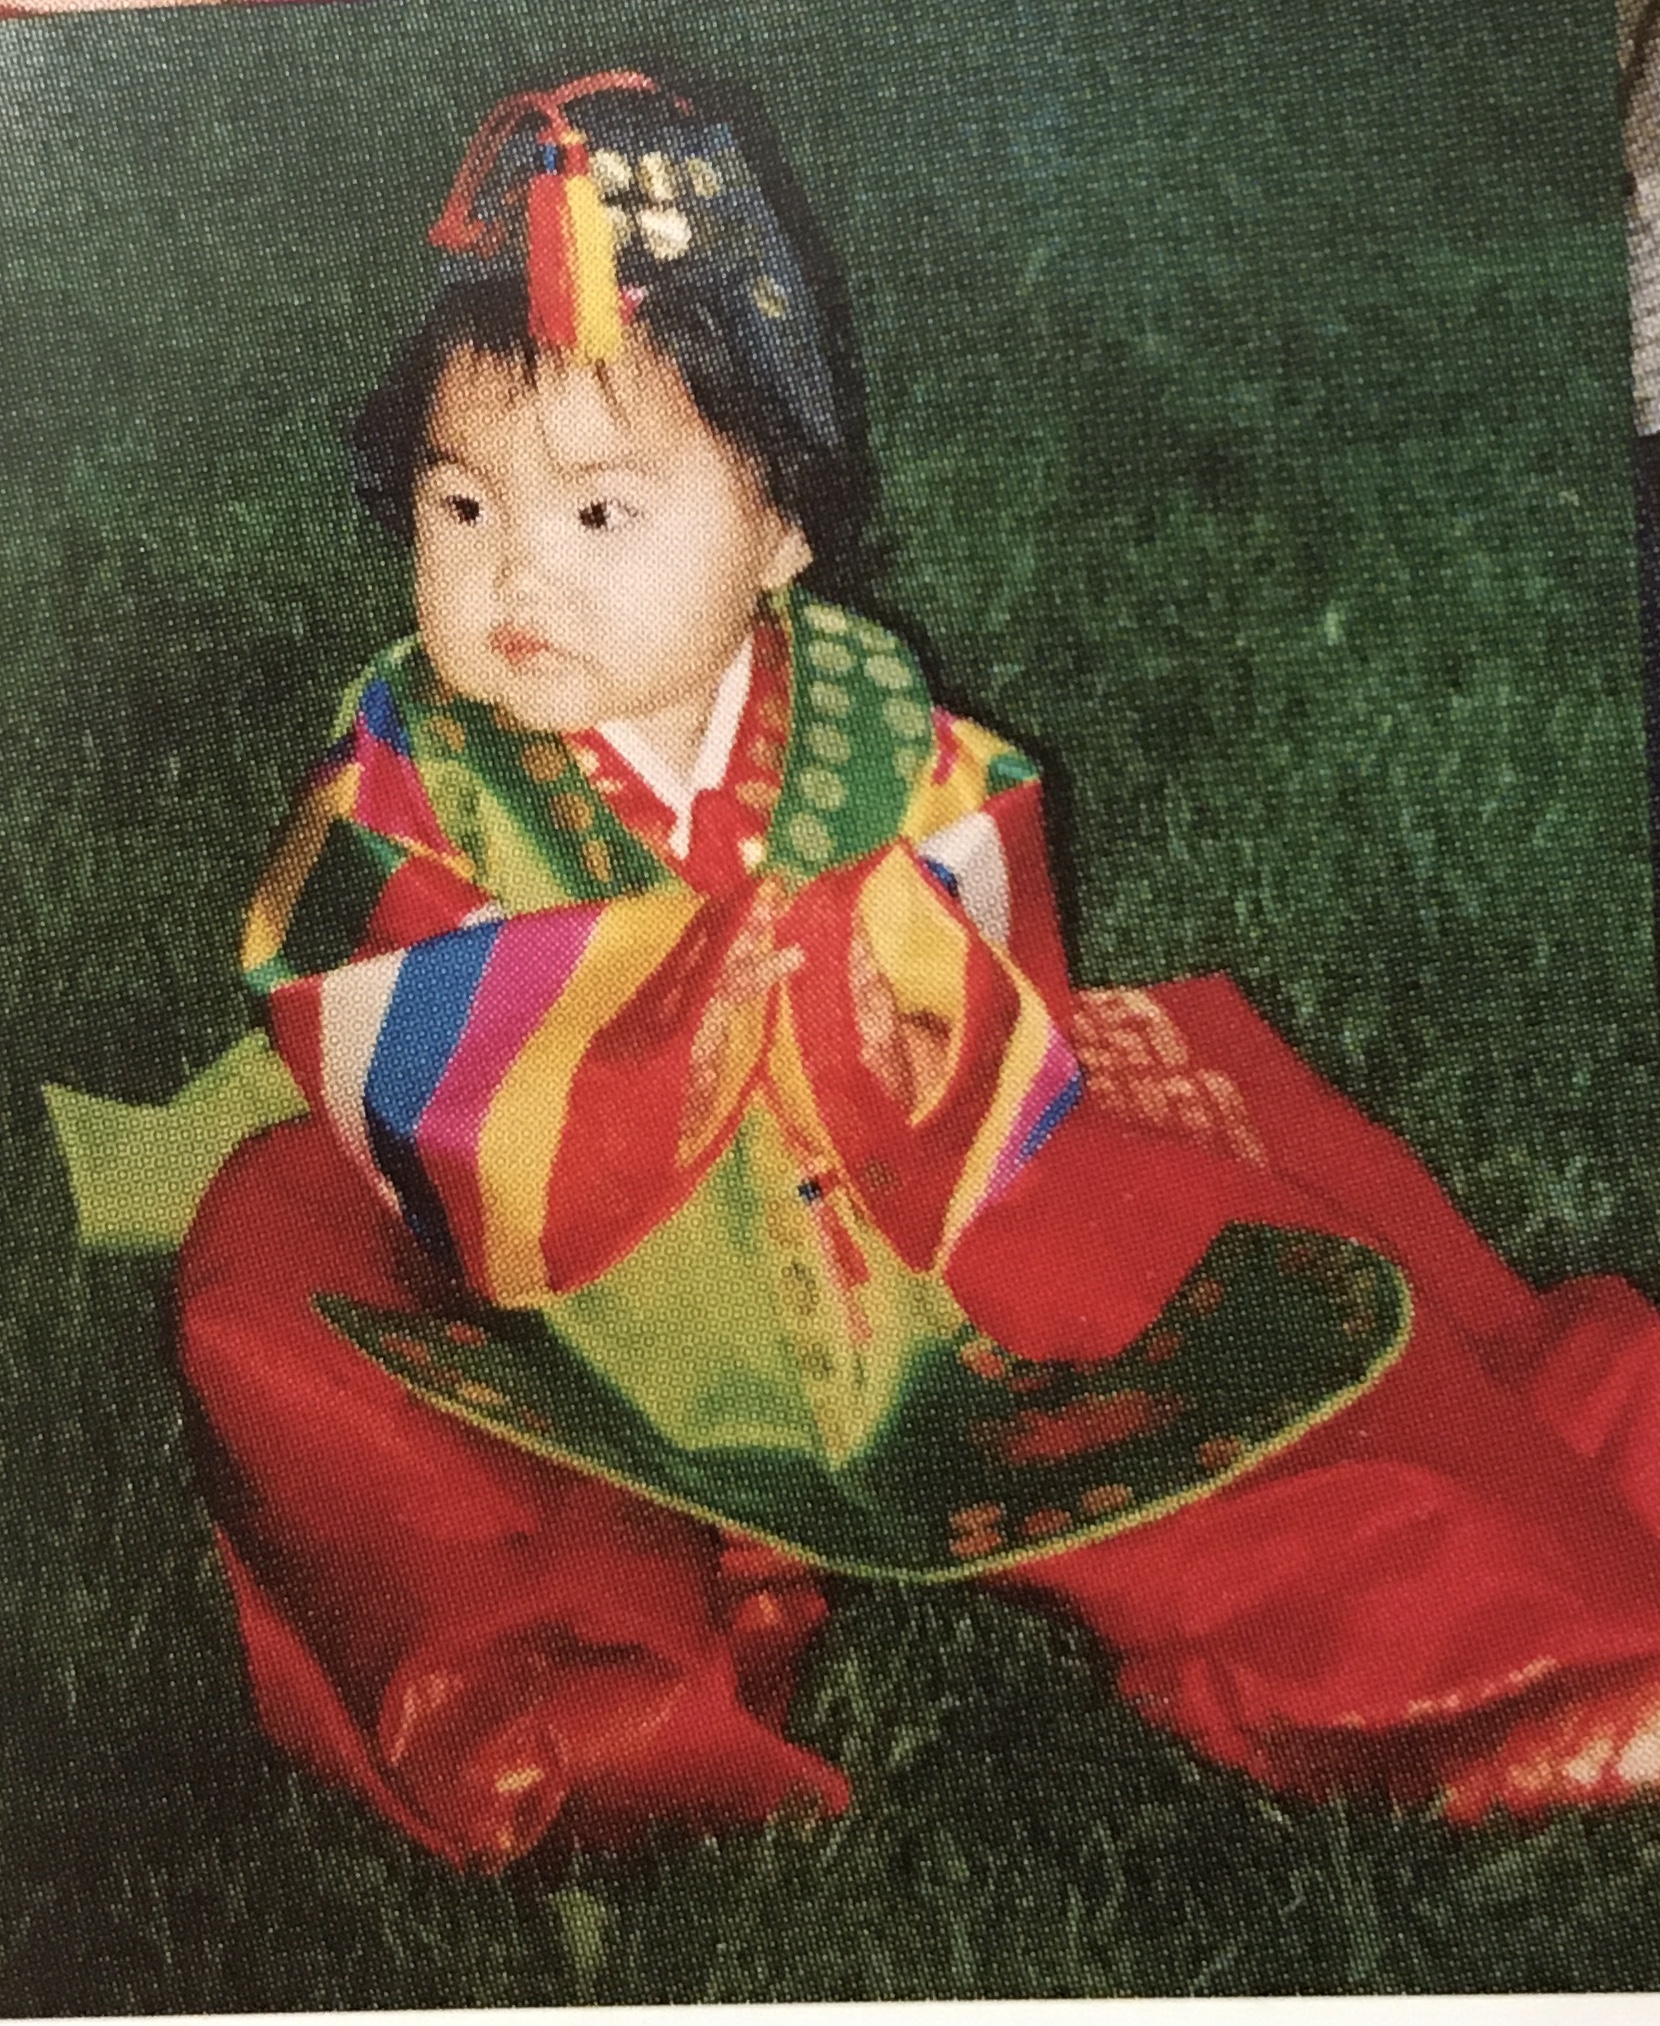 Charlotte in traditional Korean hanbok